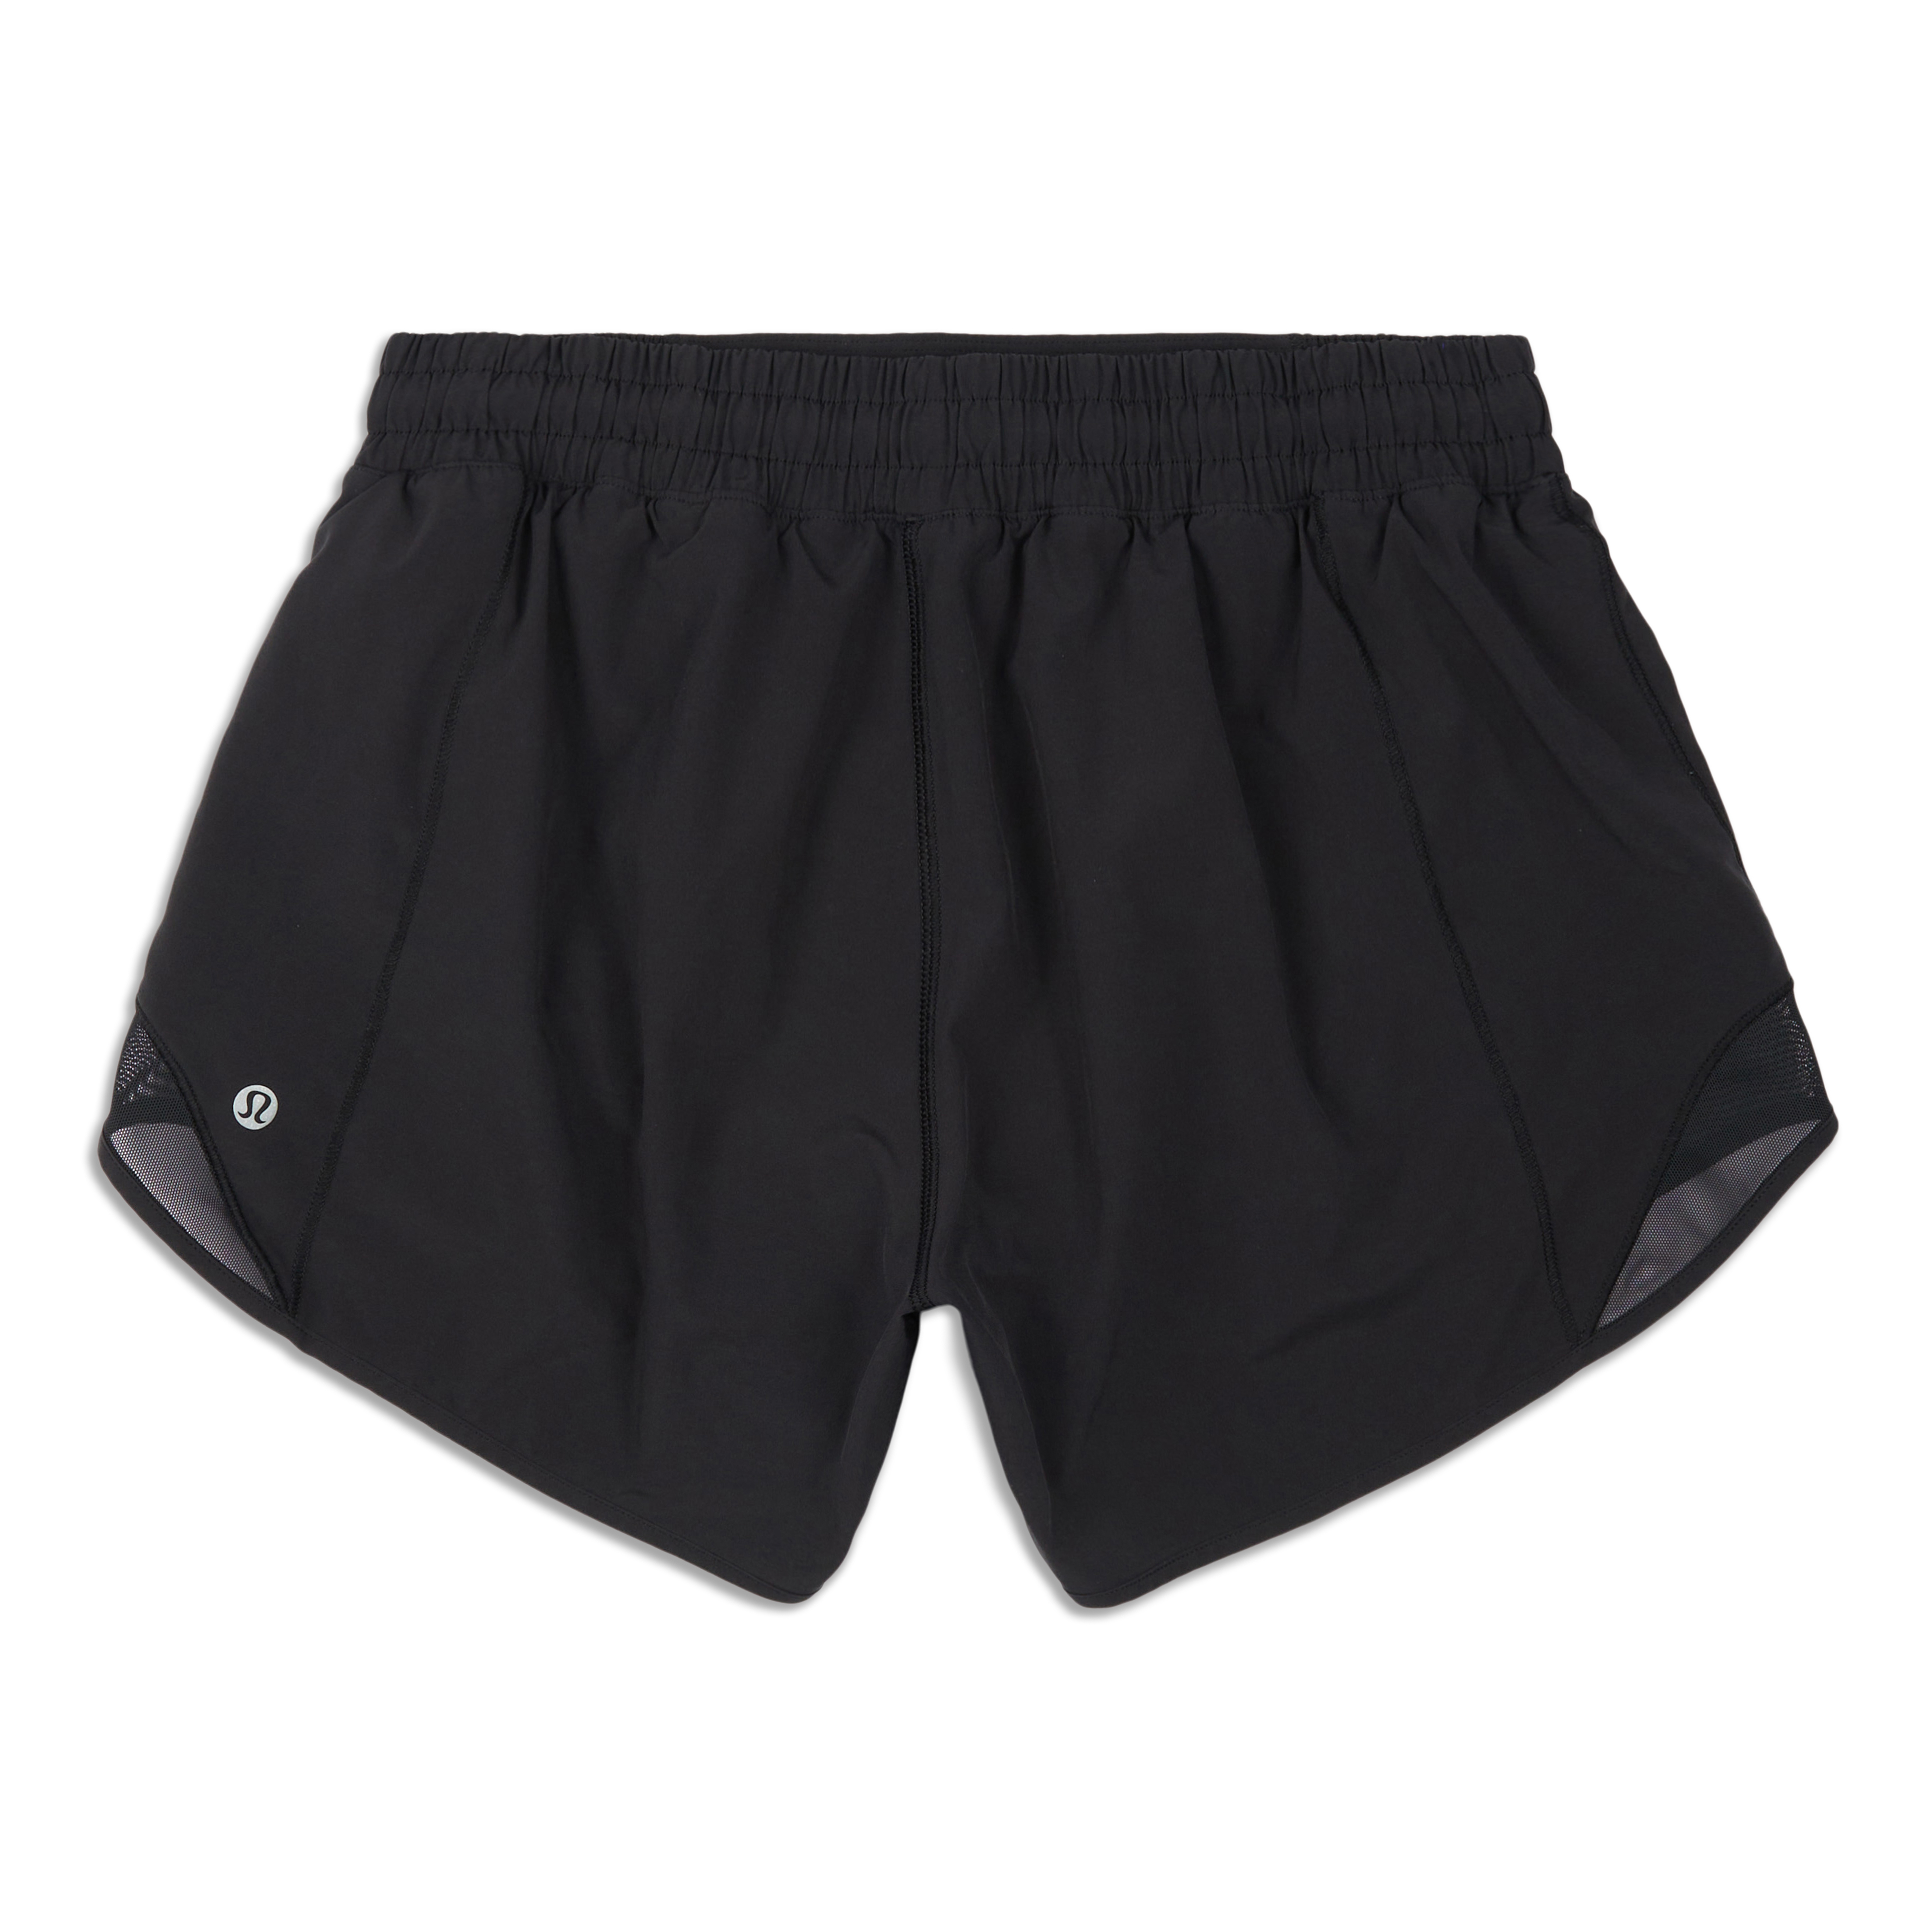 lululemon shorts are back: Shop the Hotty Hot, Wunder Train, and